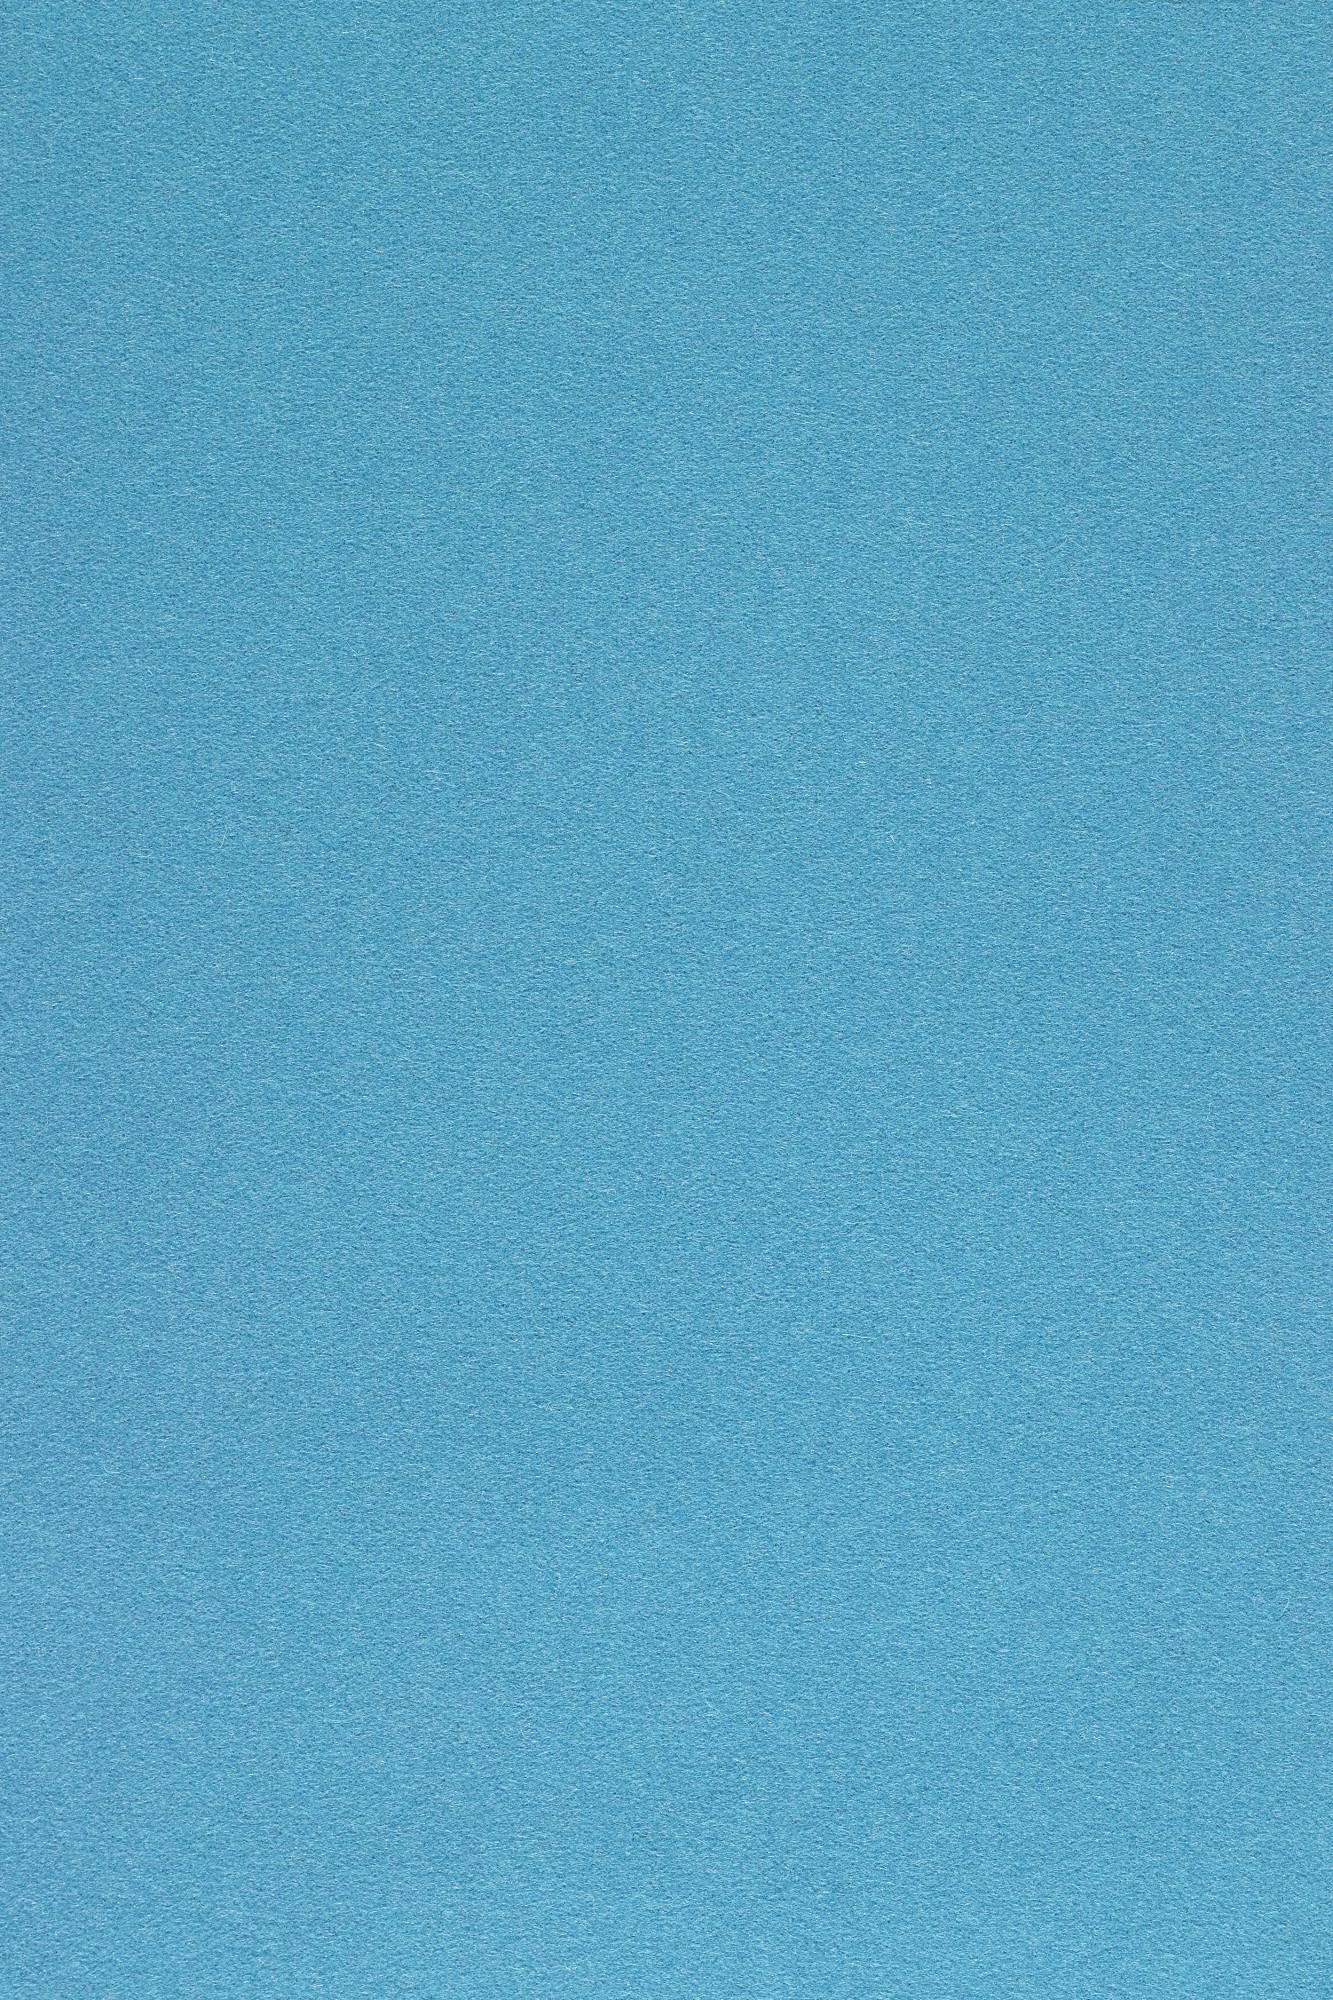 Fabric sample Divina 3 826 blue